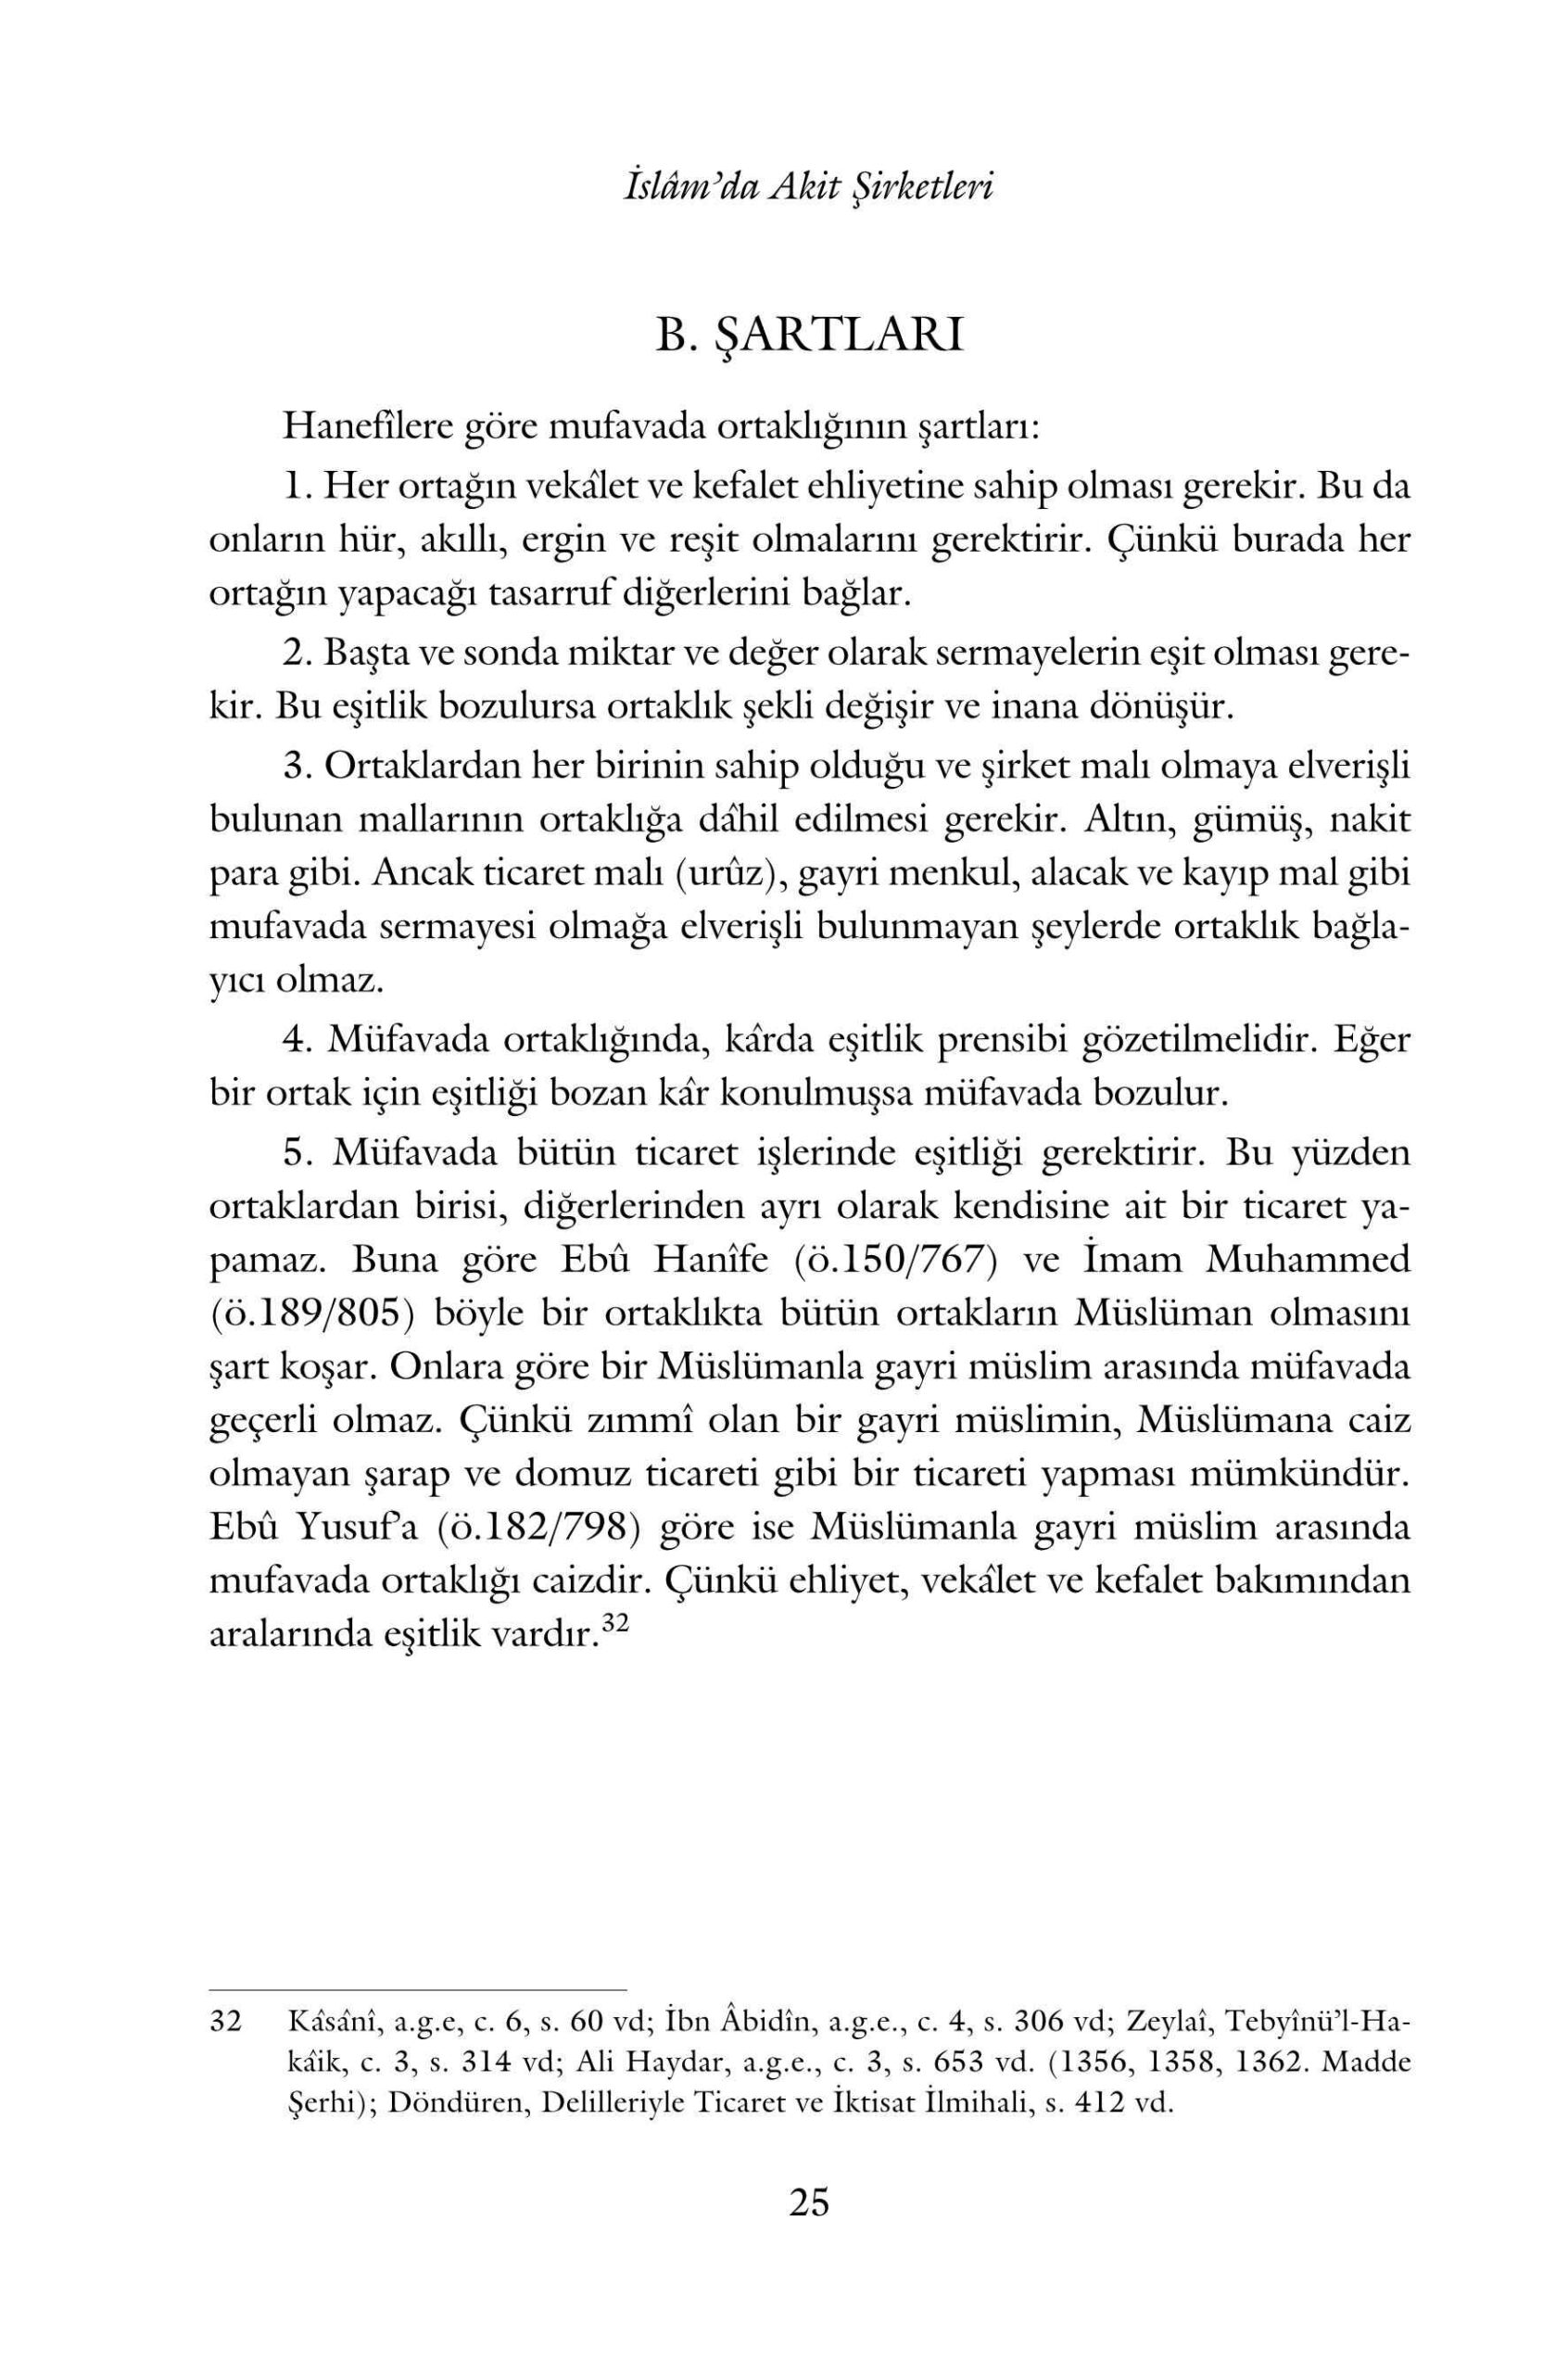 Hasan Ellek - Islam Hukukunda Emek-Sermaye Ortakligi (Mudarebe) - IsikAkademiY.pdf, 144-Sayfa 